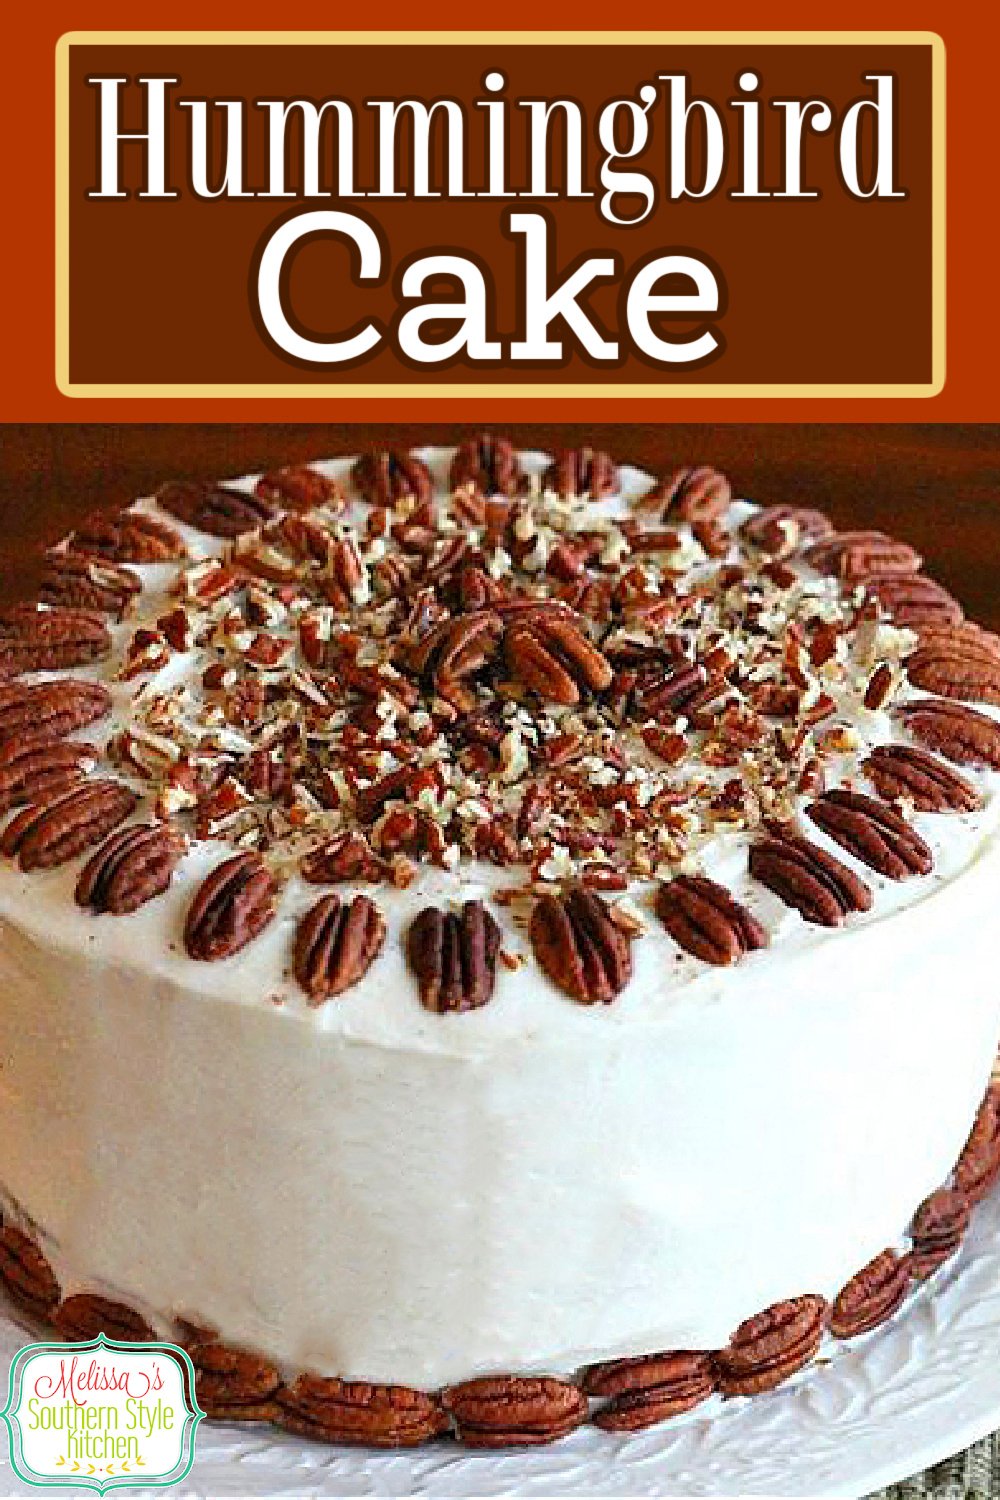 This Southern classic Hummingbird Cake never disappoints #hummingbirdcake #cakesrecipes #southerncakes #desserts #dessertfoodrecipes #pineapple #pecans #layercake #cake #holidayrecipes #holidays #southernfood #southernrecipes via @melissasssk